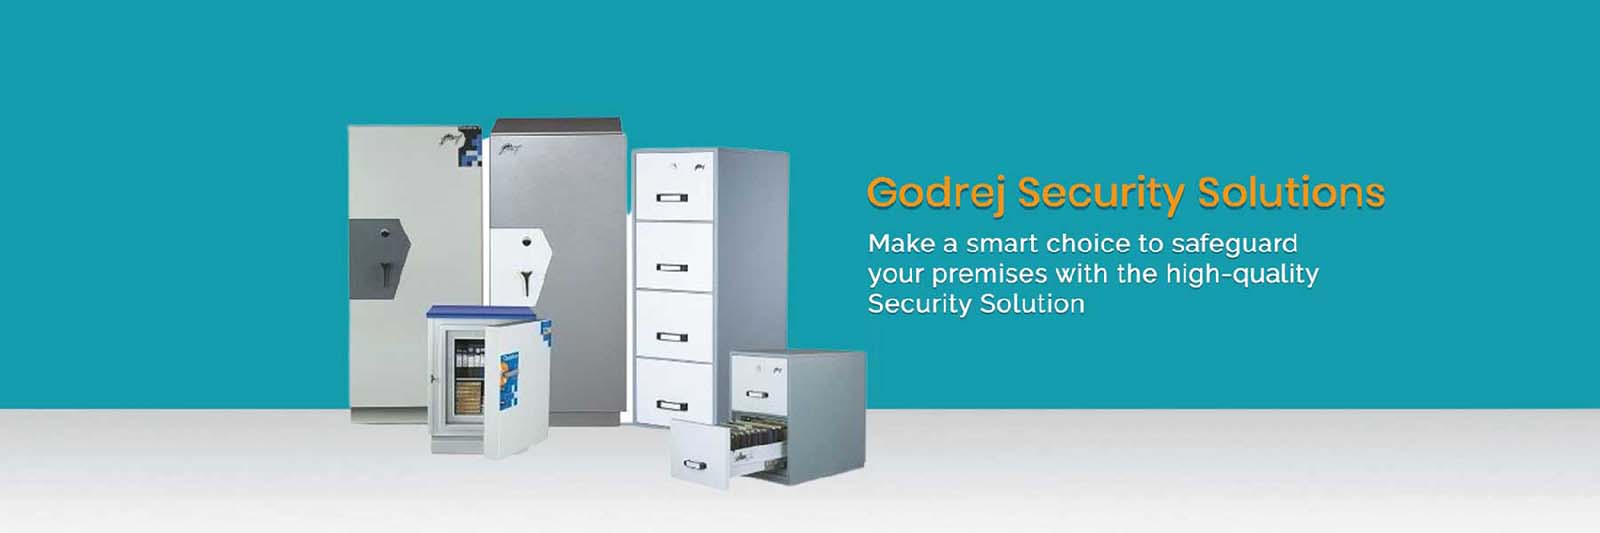 Godrej Security Solutions in Delhi Vidhan Sabha